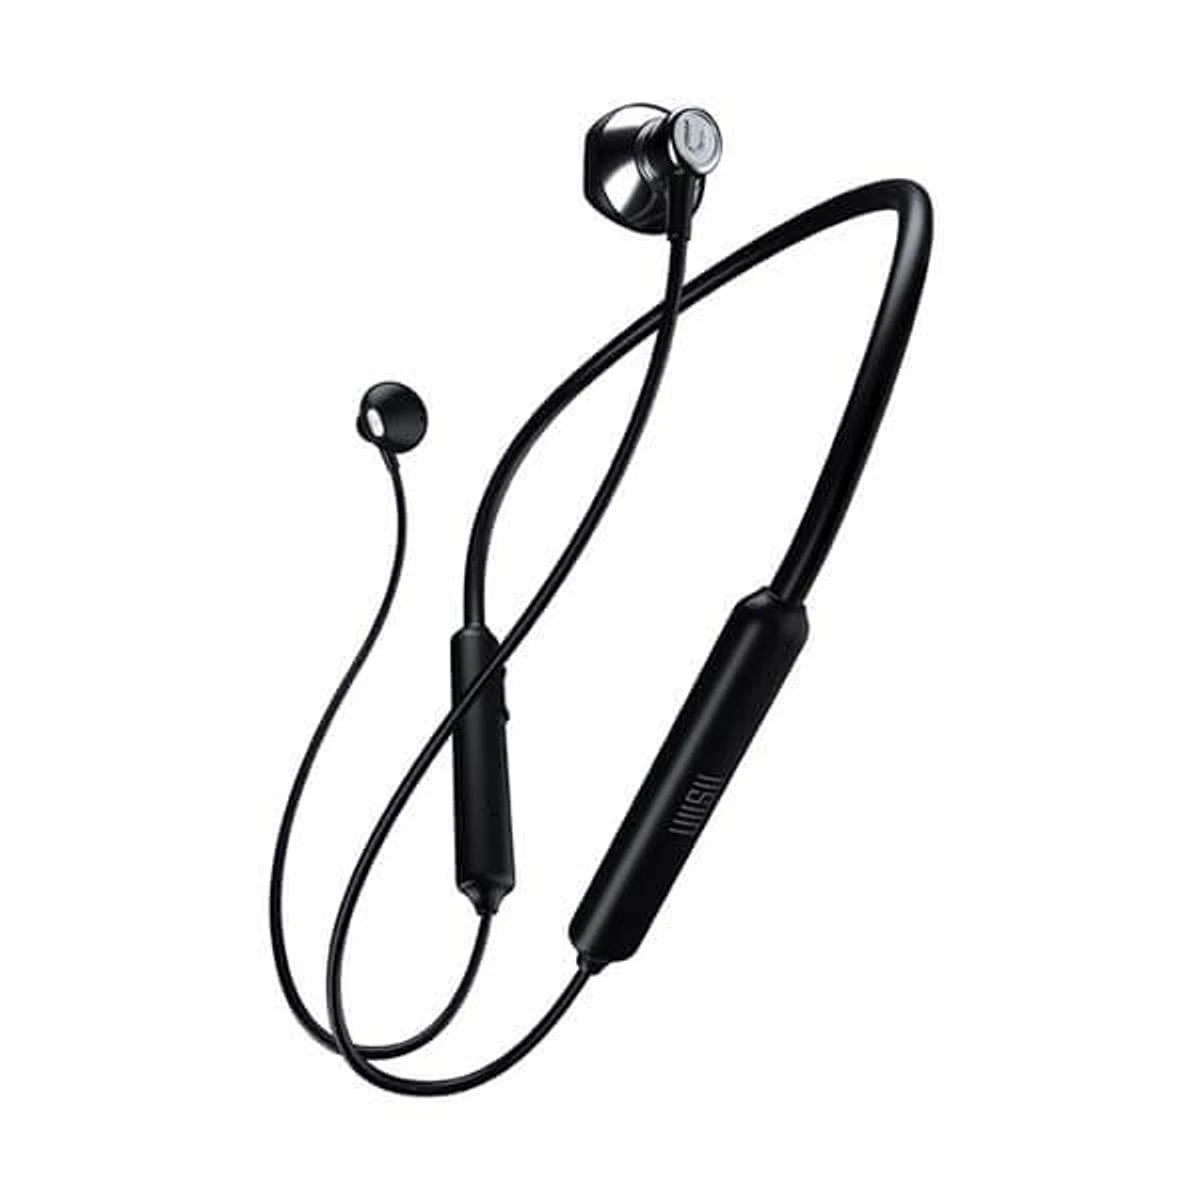 UiiSii BN22 Hanging Neck Wireless Bluetooth Headset Semi-In-Earphone